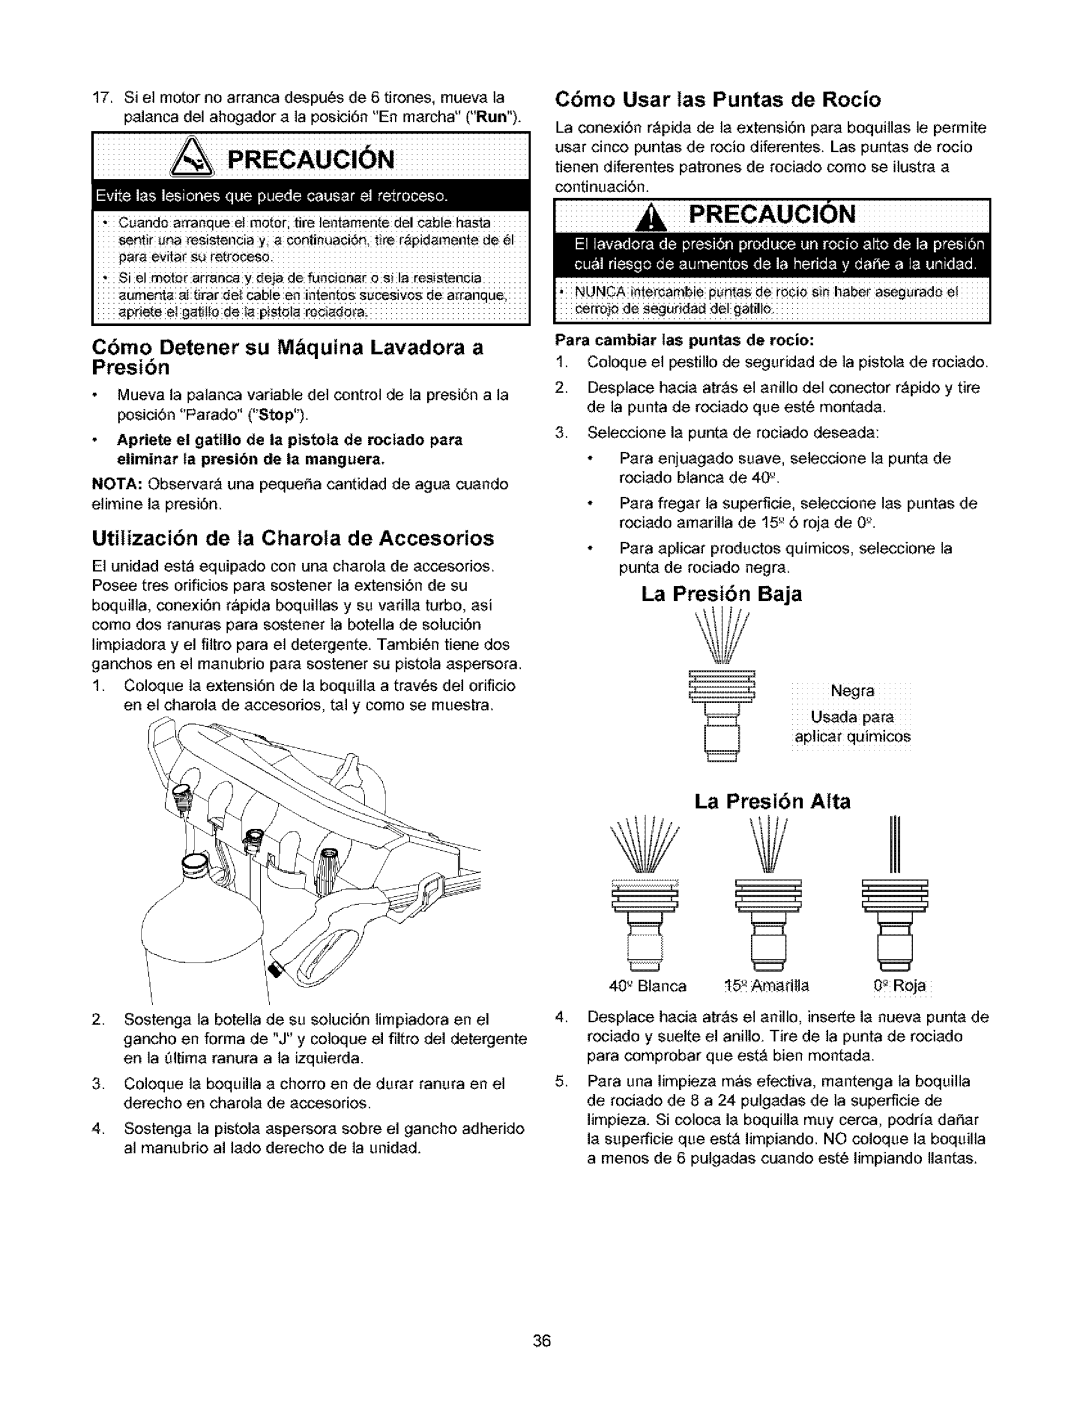 Craftsman 580.753 manual Precaucion, Cbmo Detener su M_quina Lavadora a Presibn, Utilizacibn de ta Charota de Accesorios 